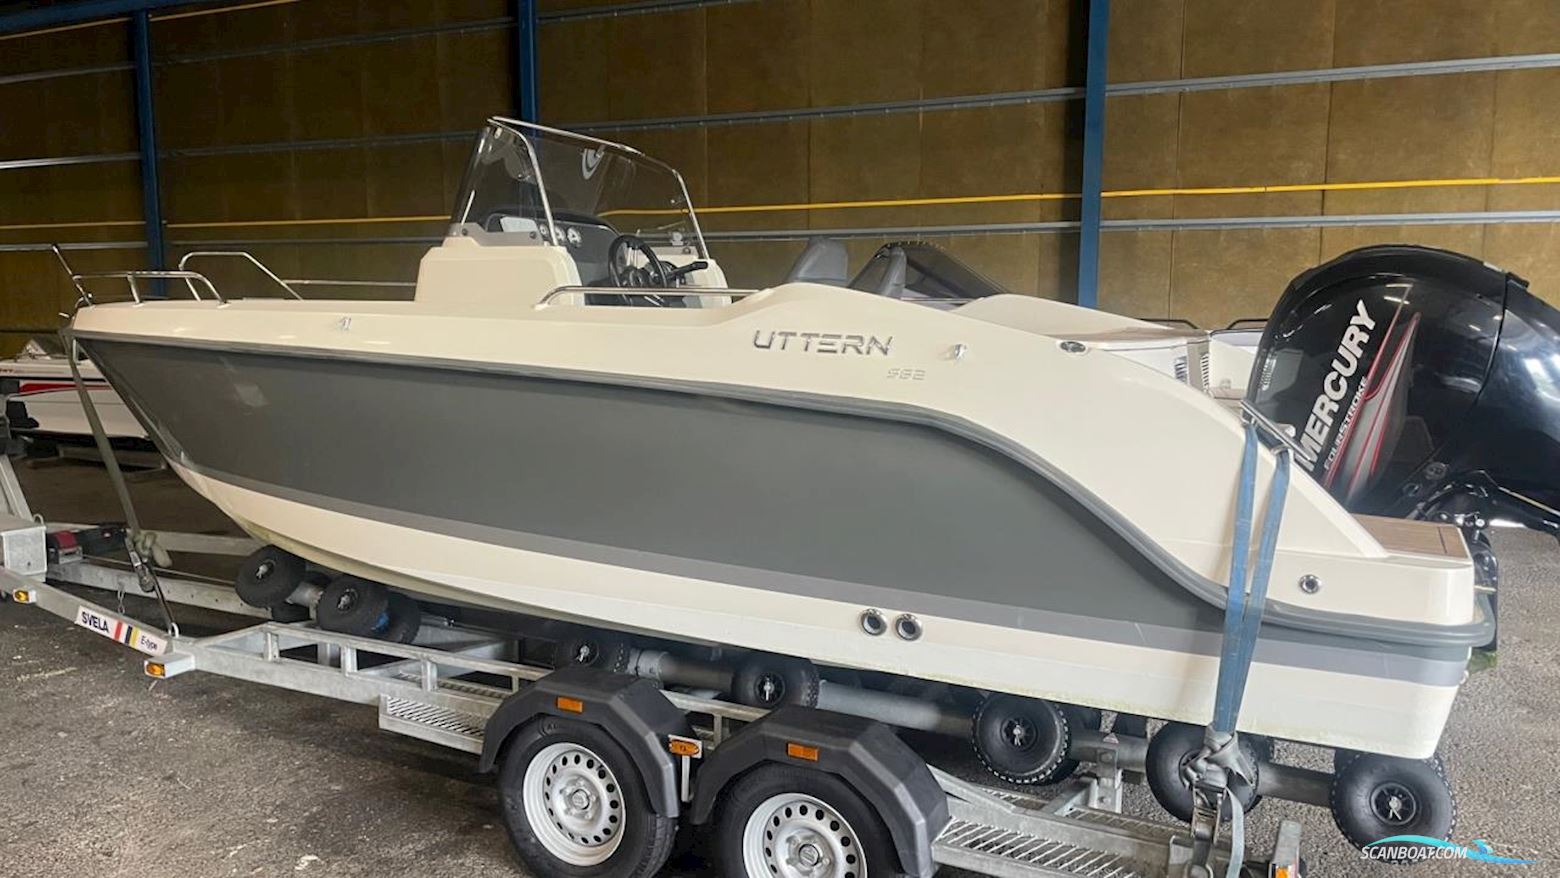 Uttern S62 Motor boat 2012, with Mercury engine, Sweden